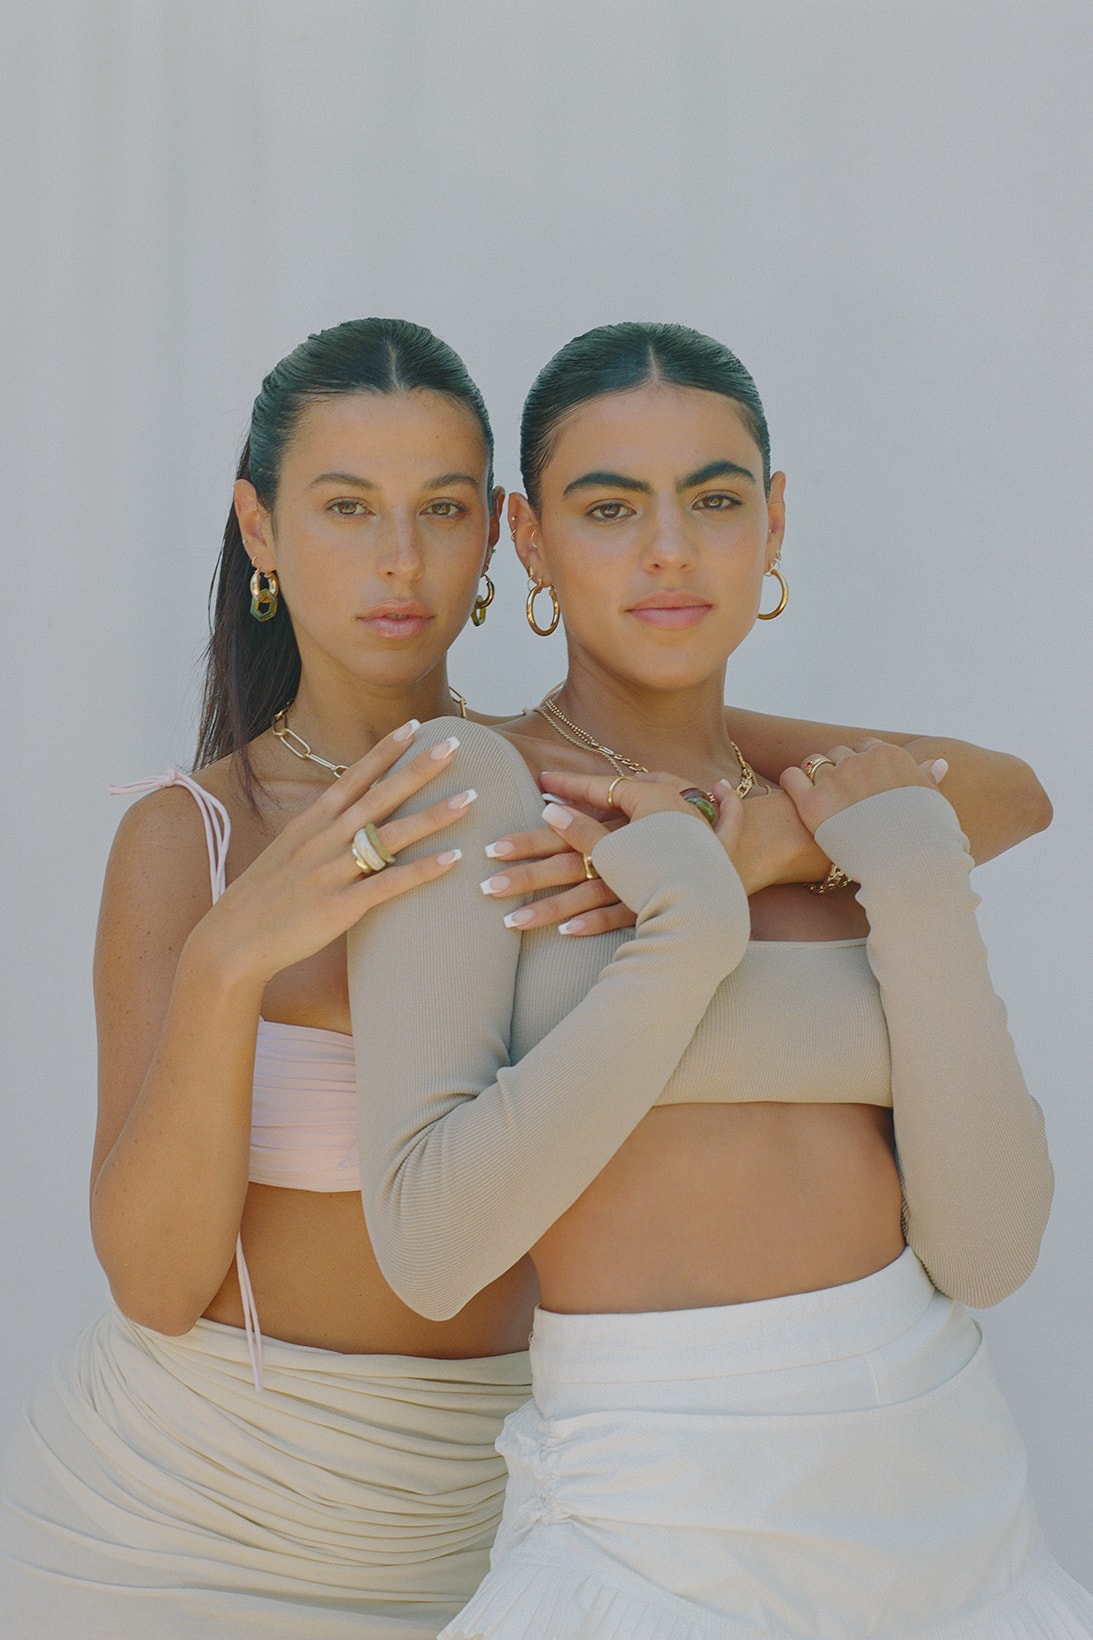 The M Jewelers Victoria Sofia Villarroel Sisters Jewelry Collection Collaboration